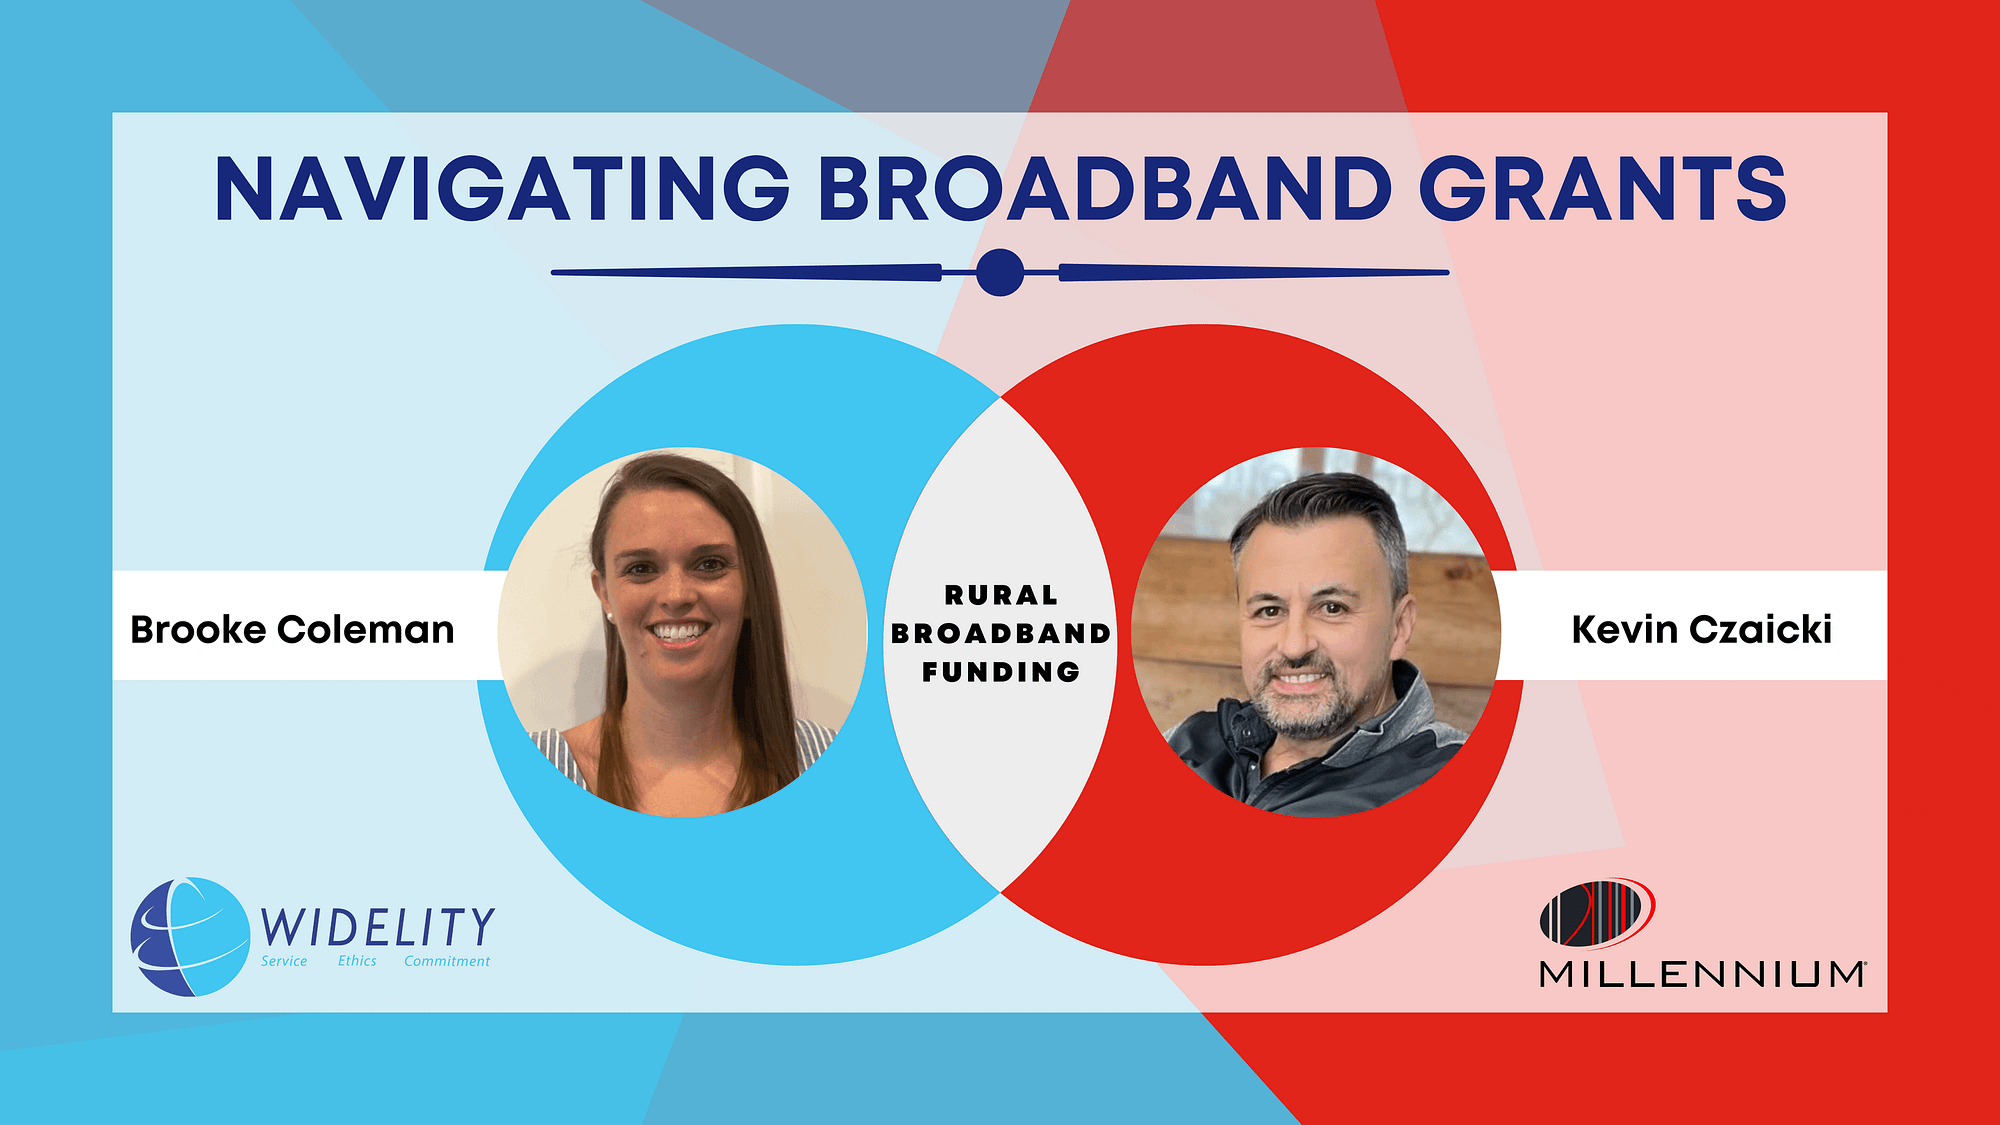 Navigating Broadband Grants Webinar in partnership with Millennium, featuring Brooke Coleman and Kevin Czaicki